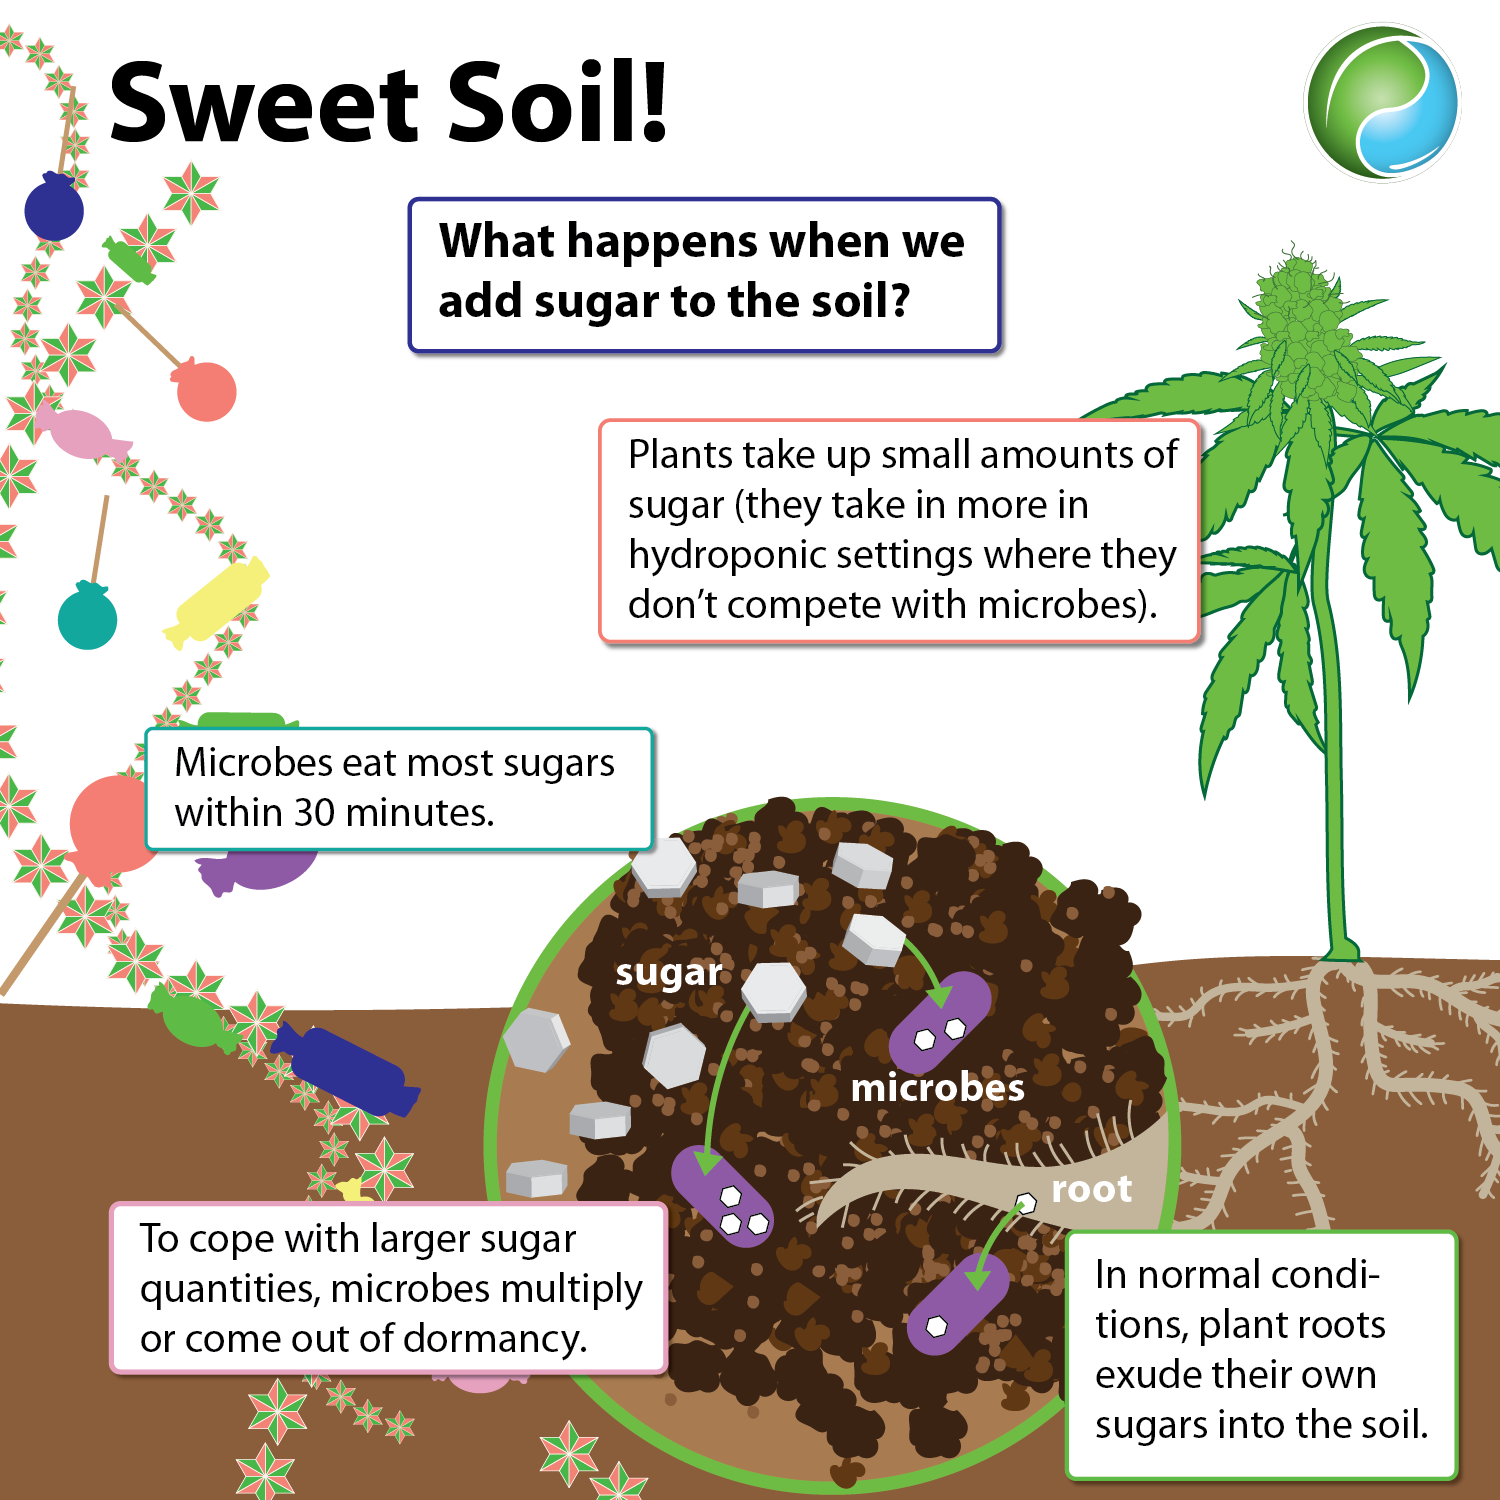 Sweet Soil